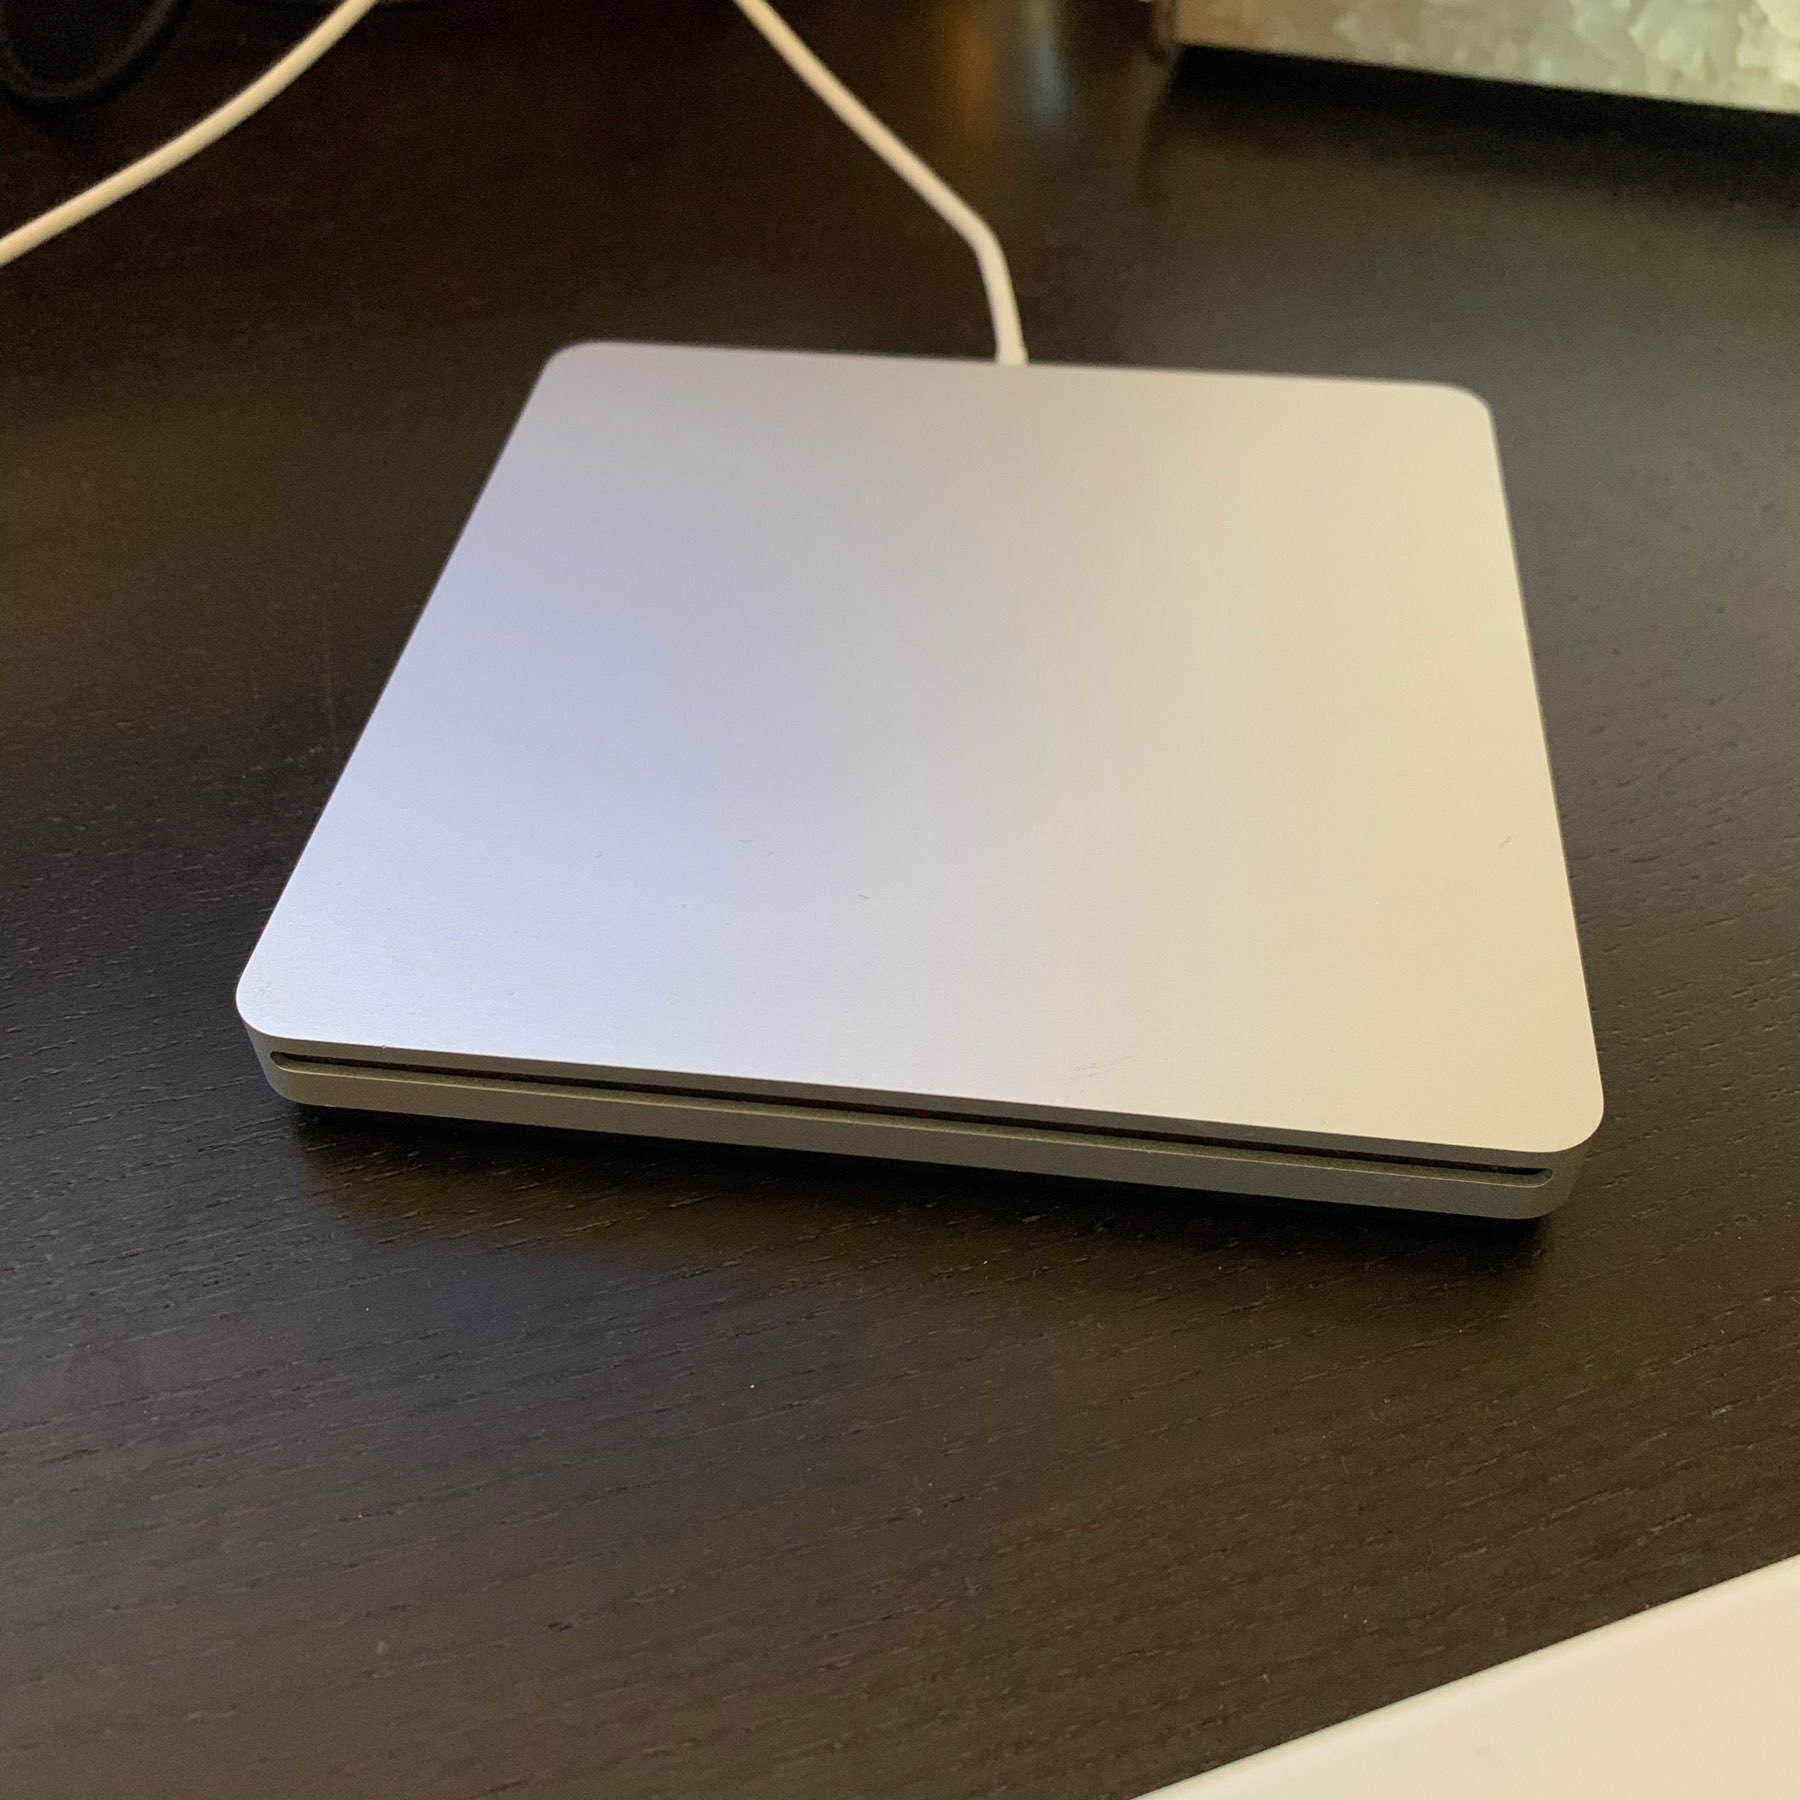 Apple external disk drive on desk